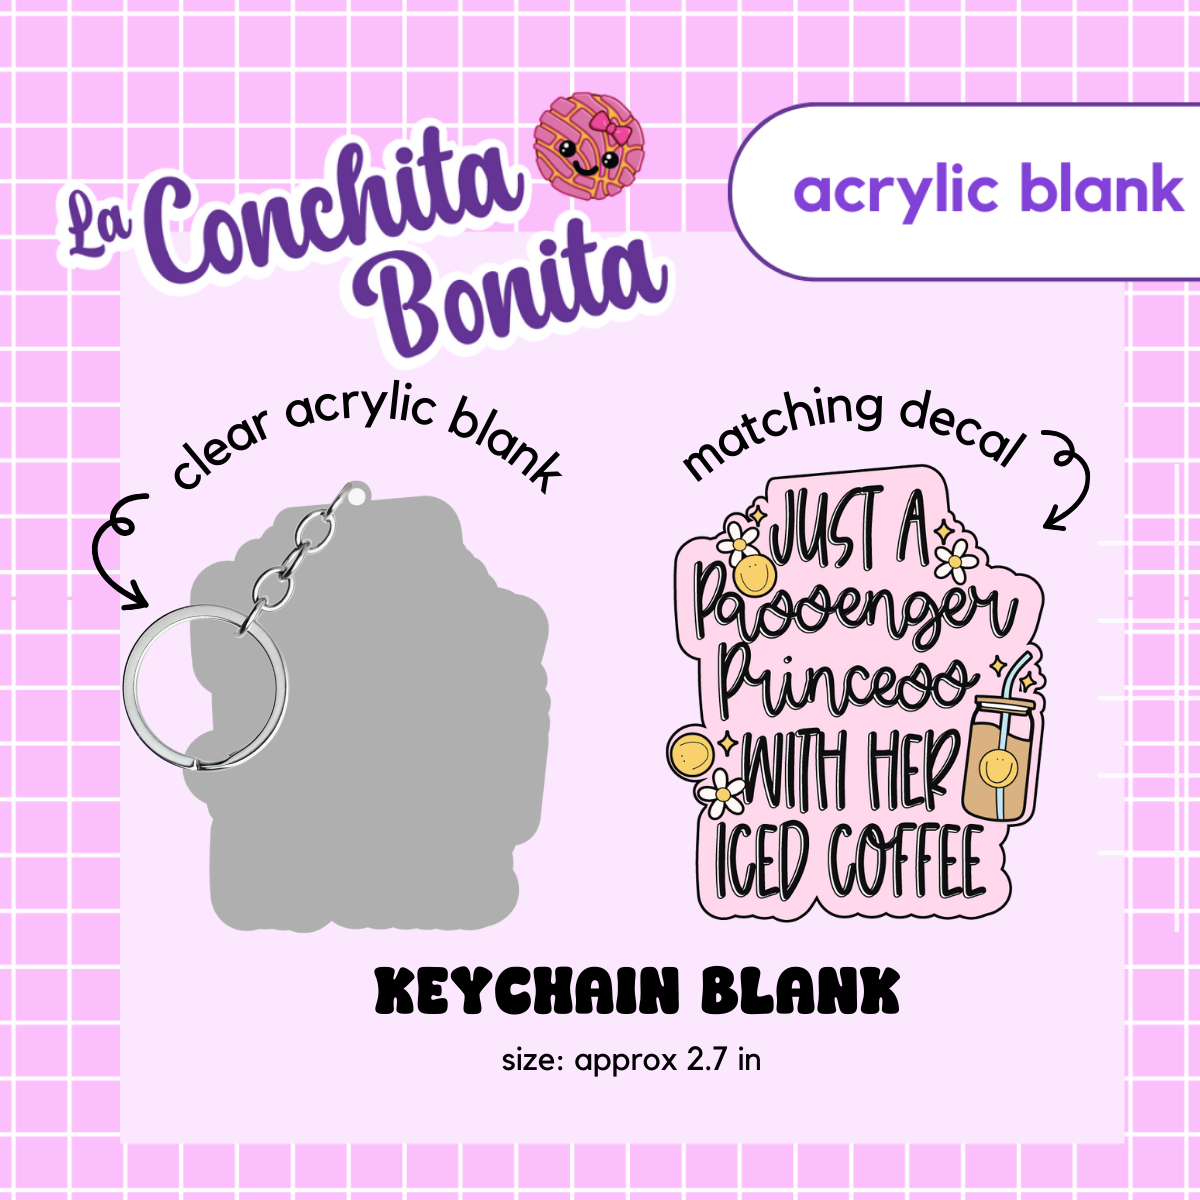 Acrylic Blank - Passenger Princess Keychain